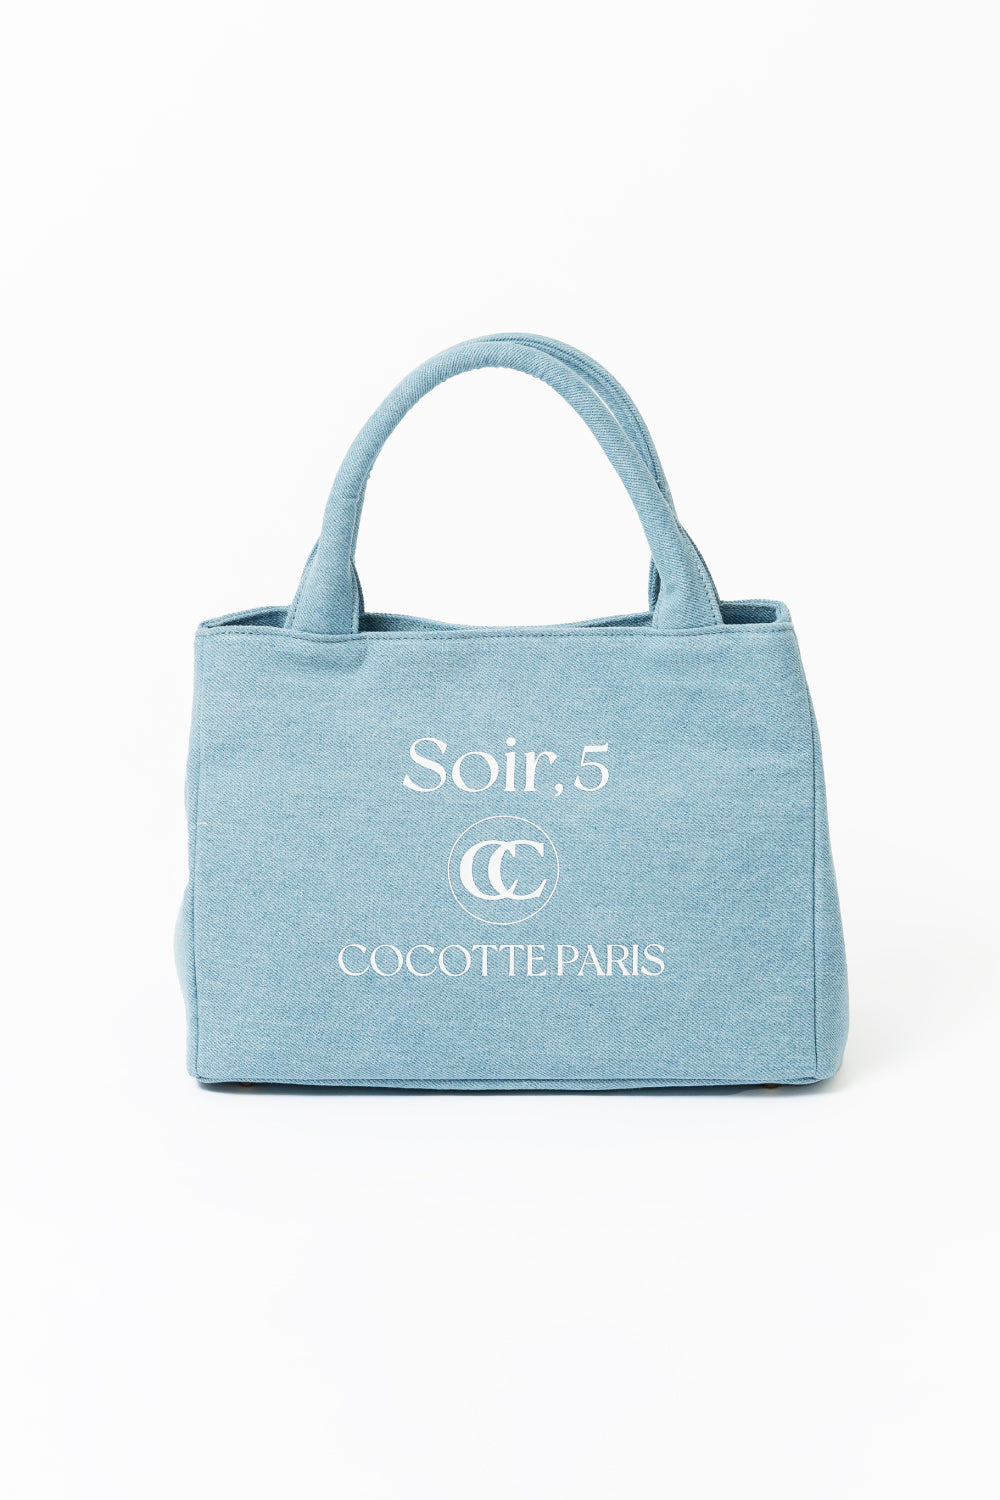 Soir,5 COCOTTE PARIS 完売 ロゴデニムトートバッグ